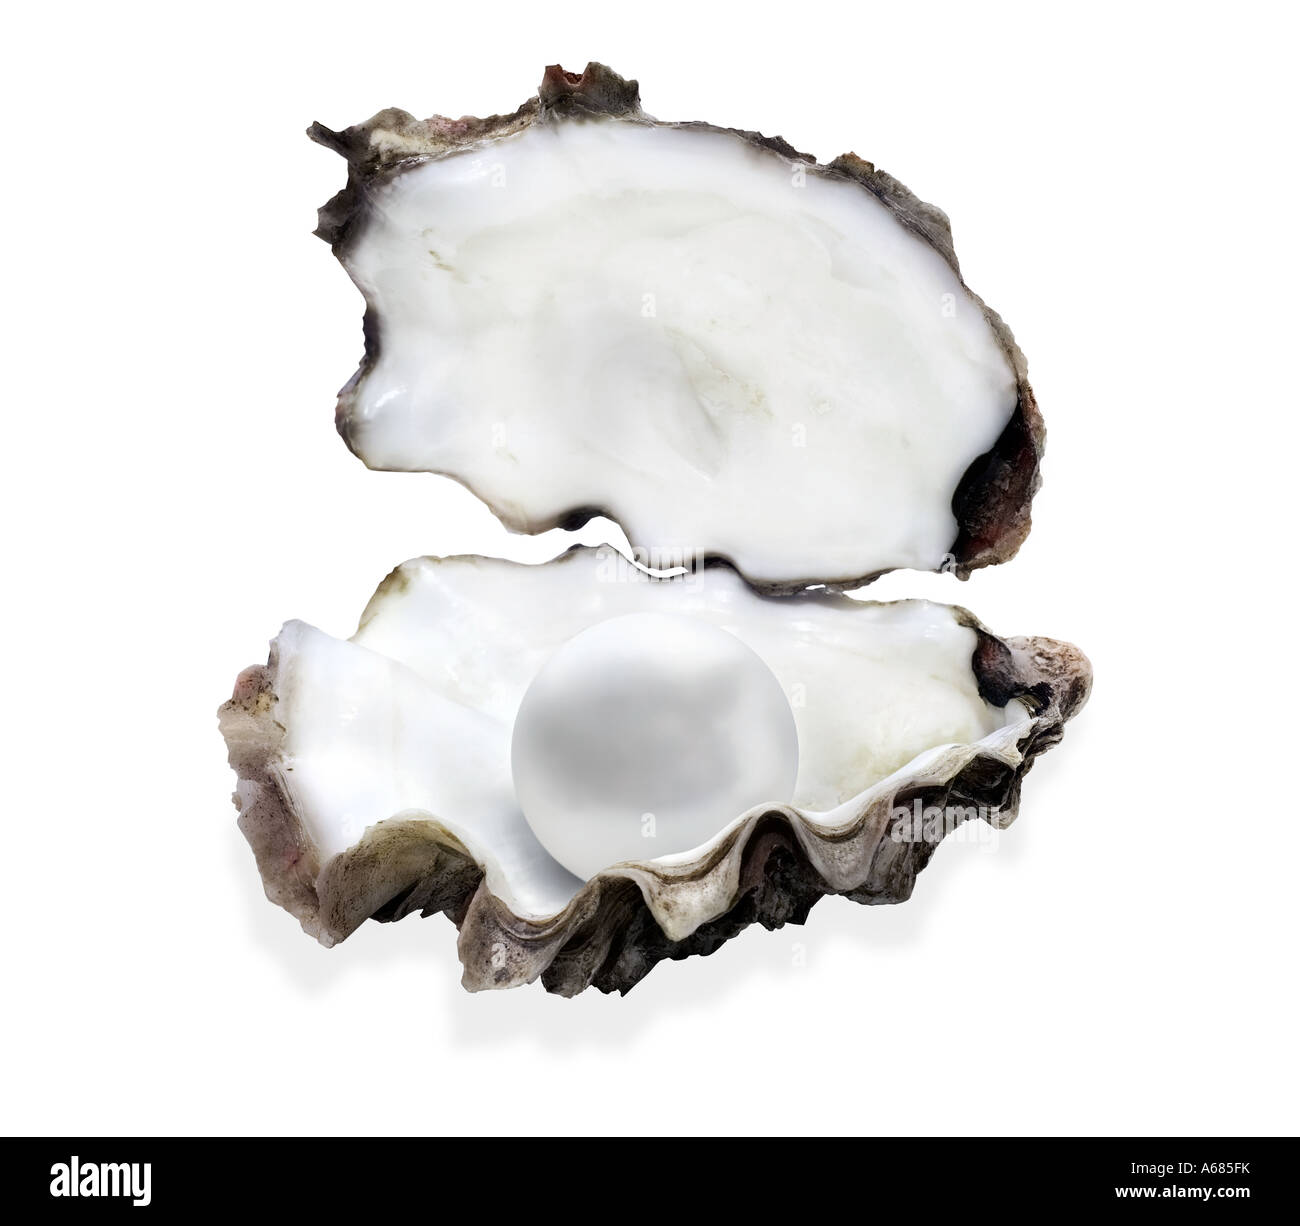 Ostra, concha de ostra, abra concha de ostra con perla dentro, recorte,  recorte Fotografía de stock - Alamy